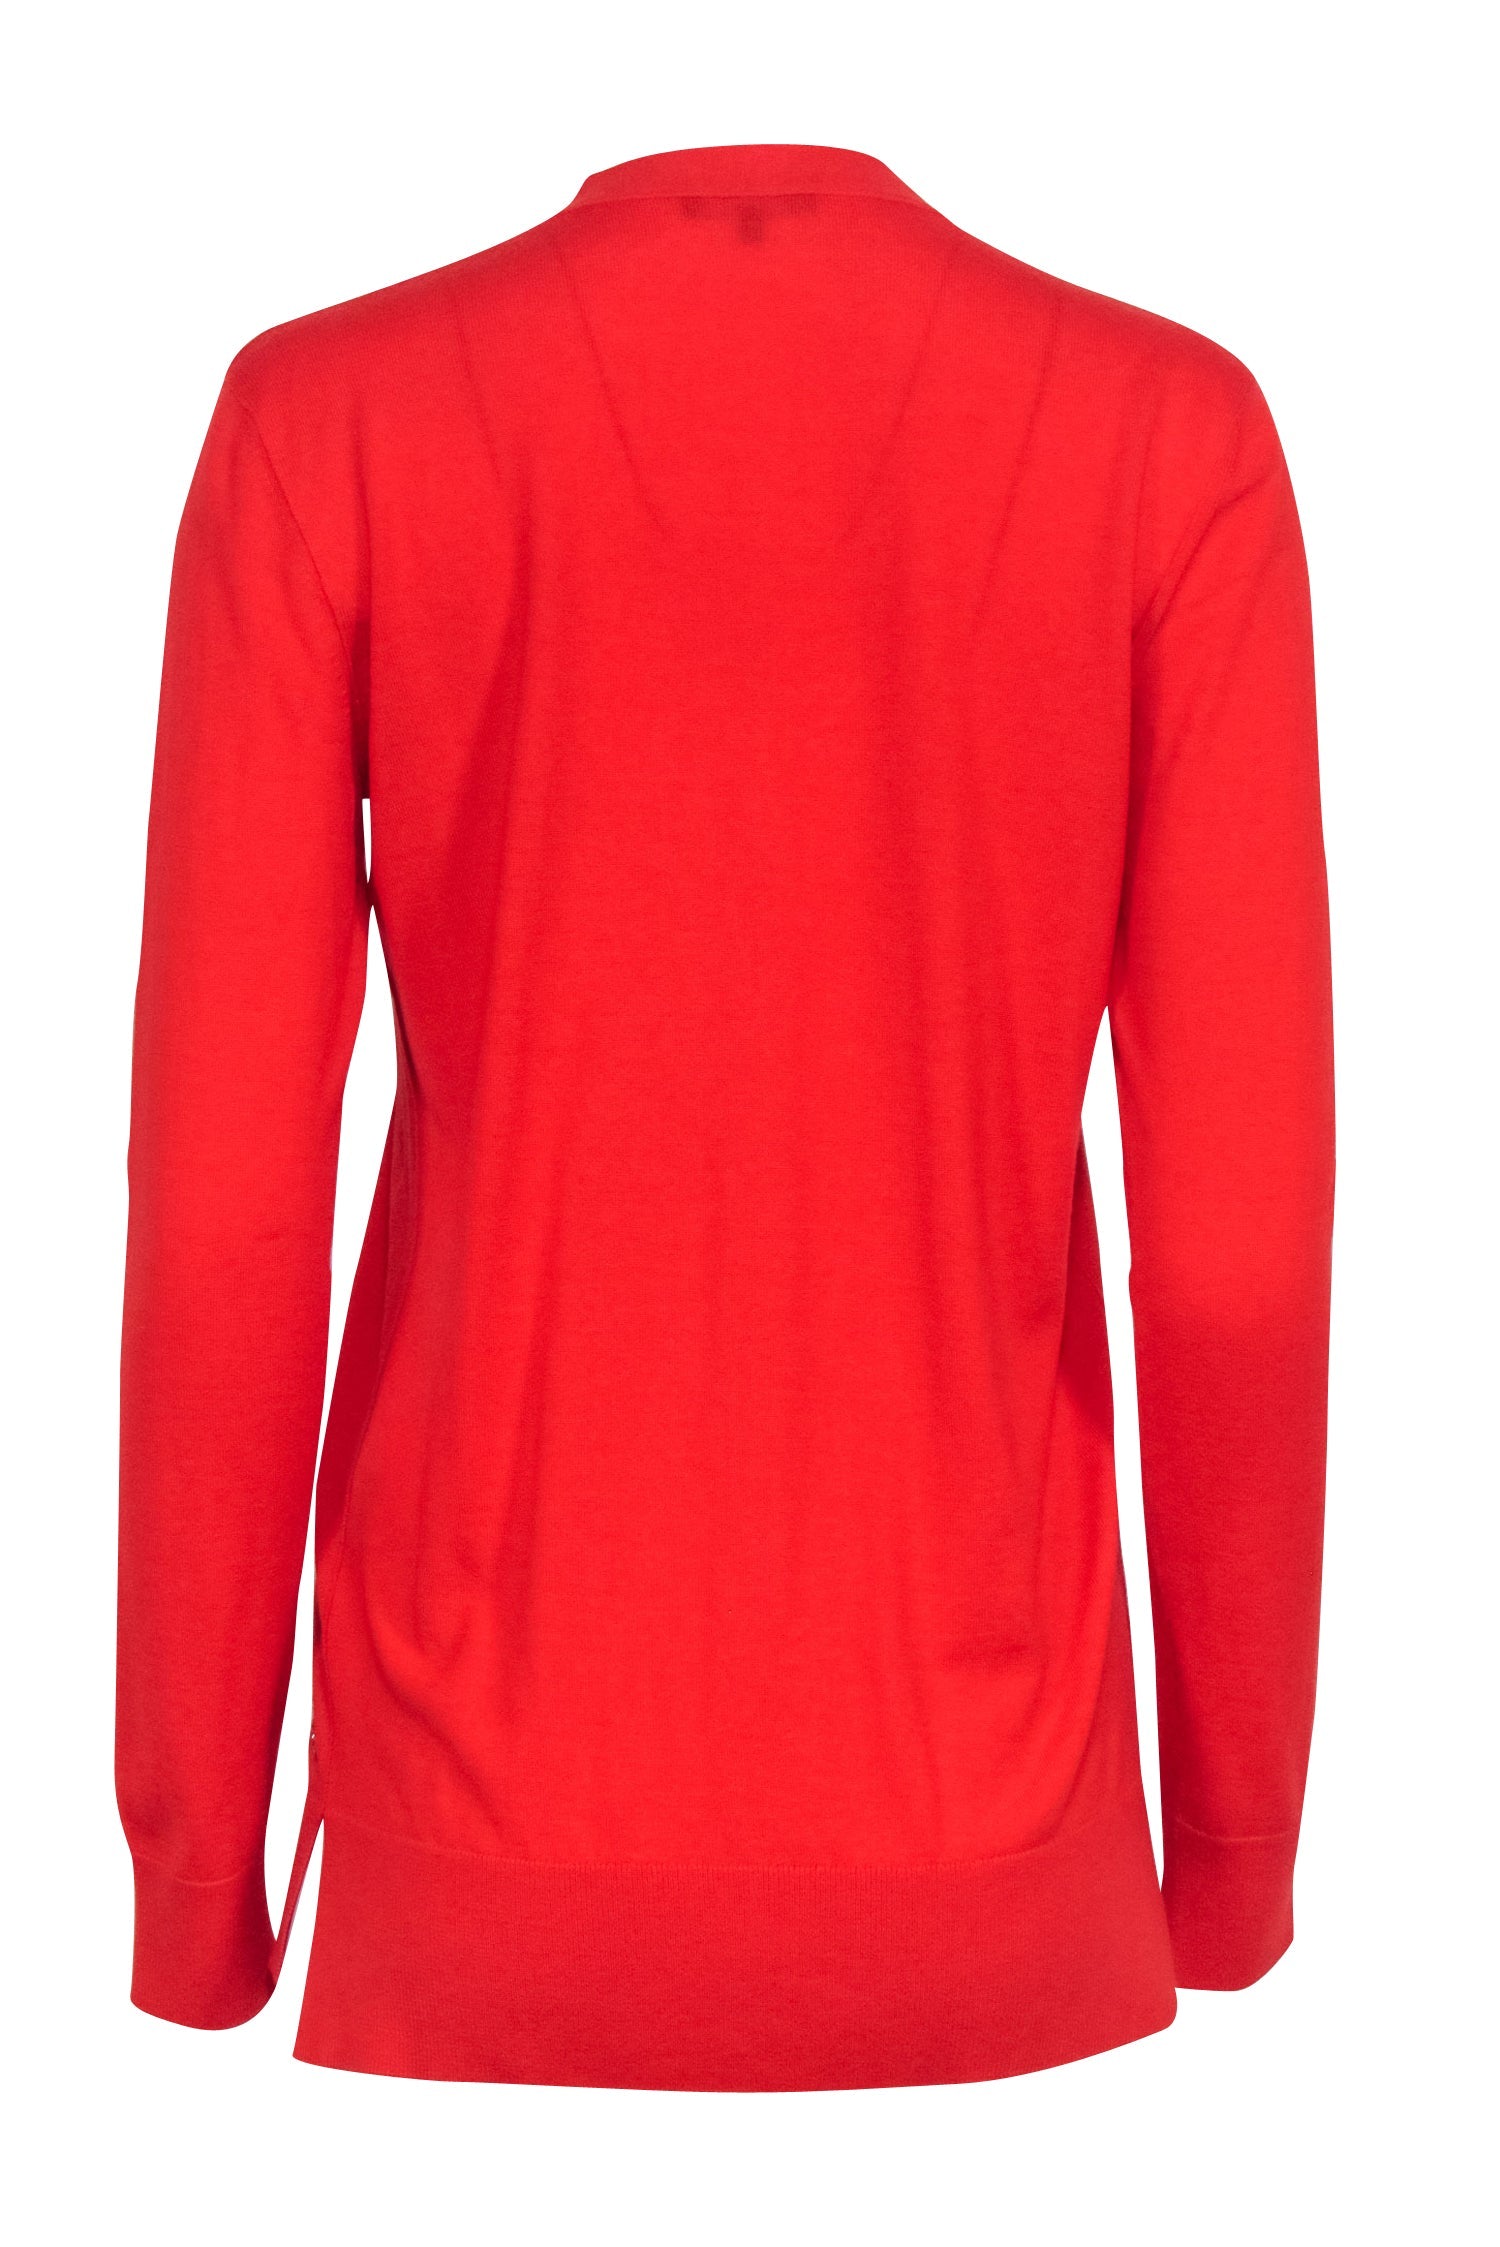 Loro Piana - Orange Cashmere Cardigan Sweater Sz 6